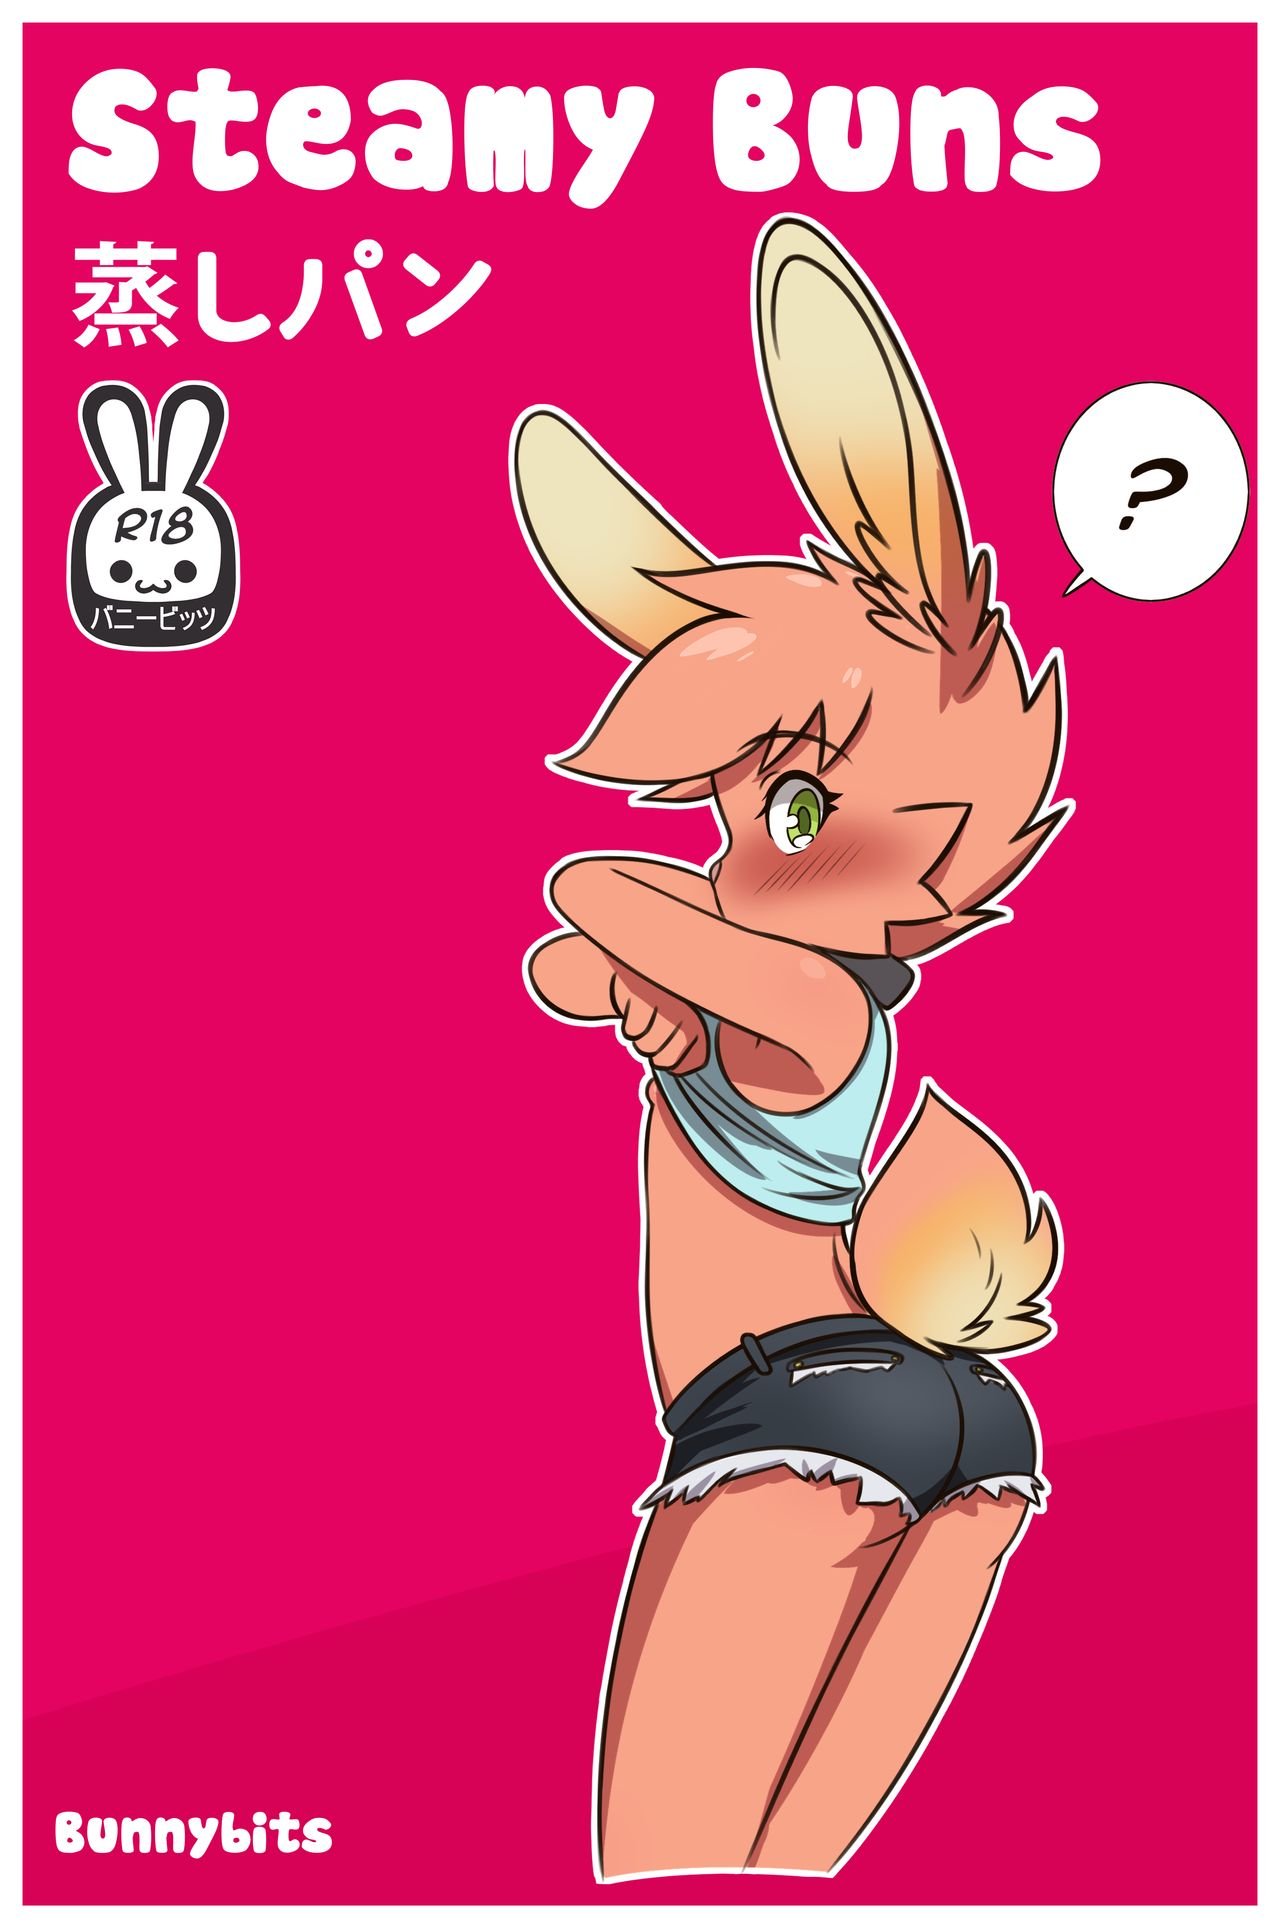 Bunnybits comics